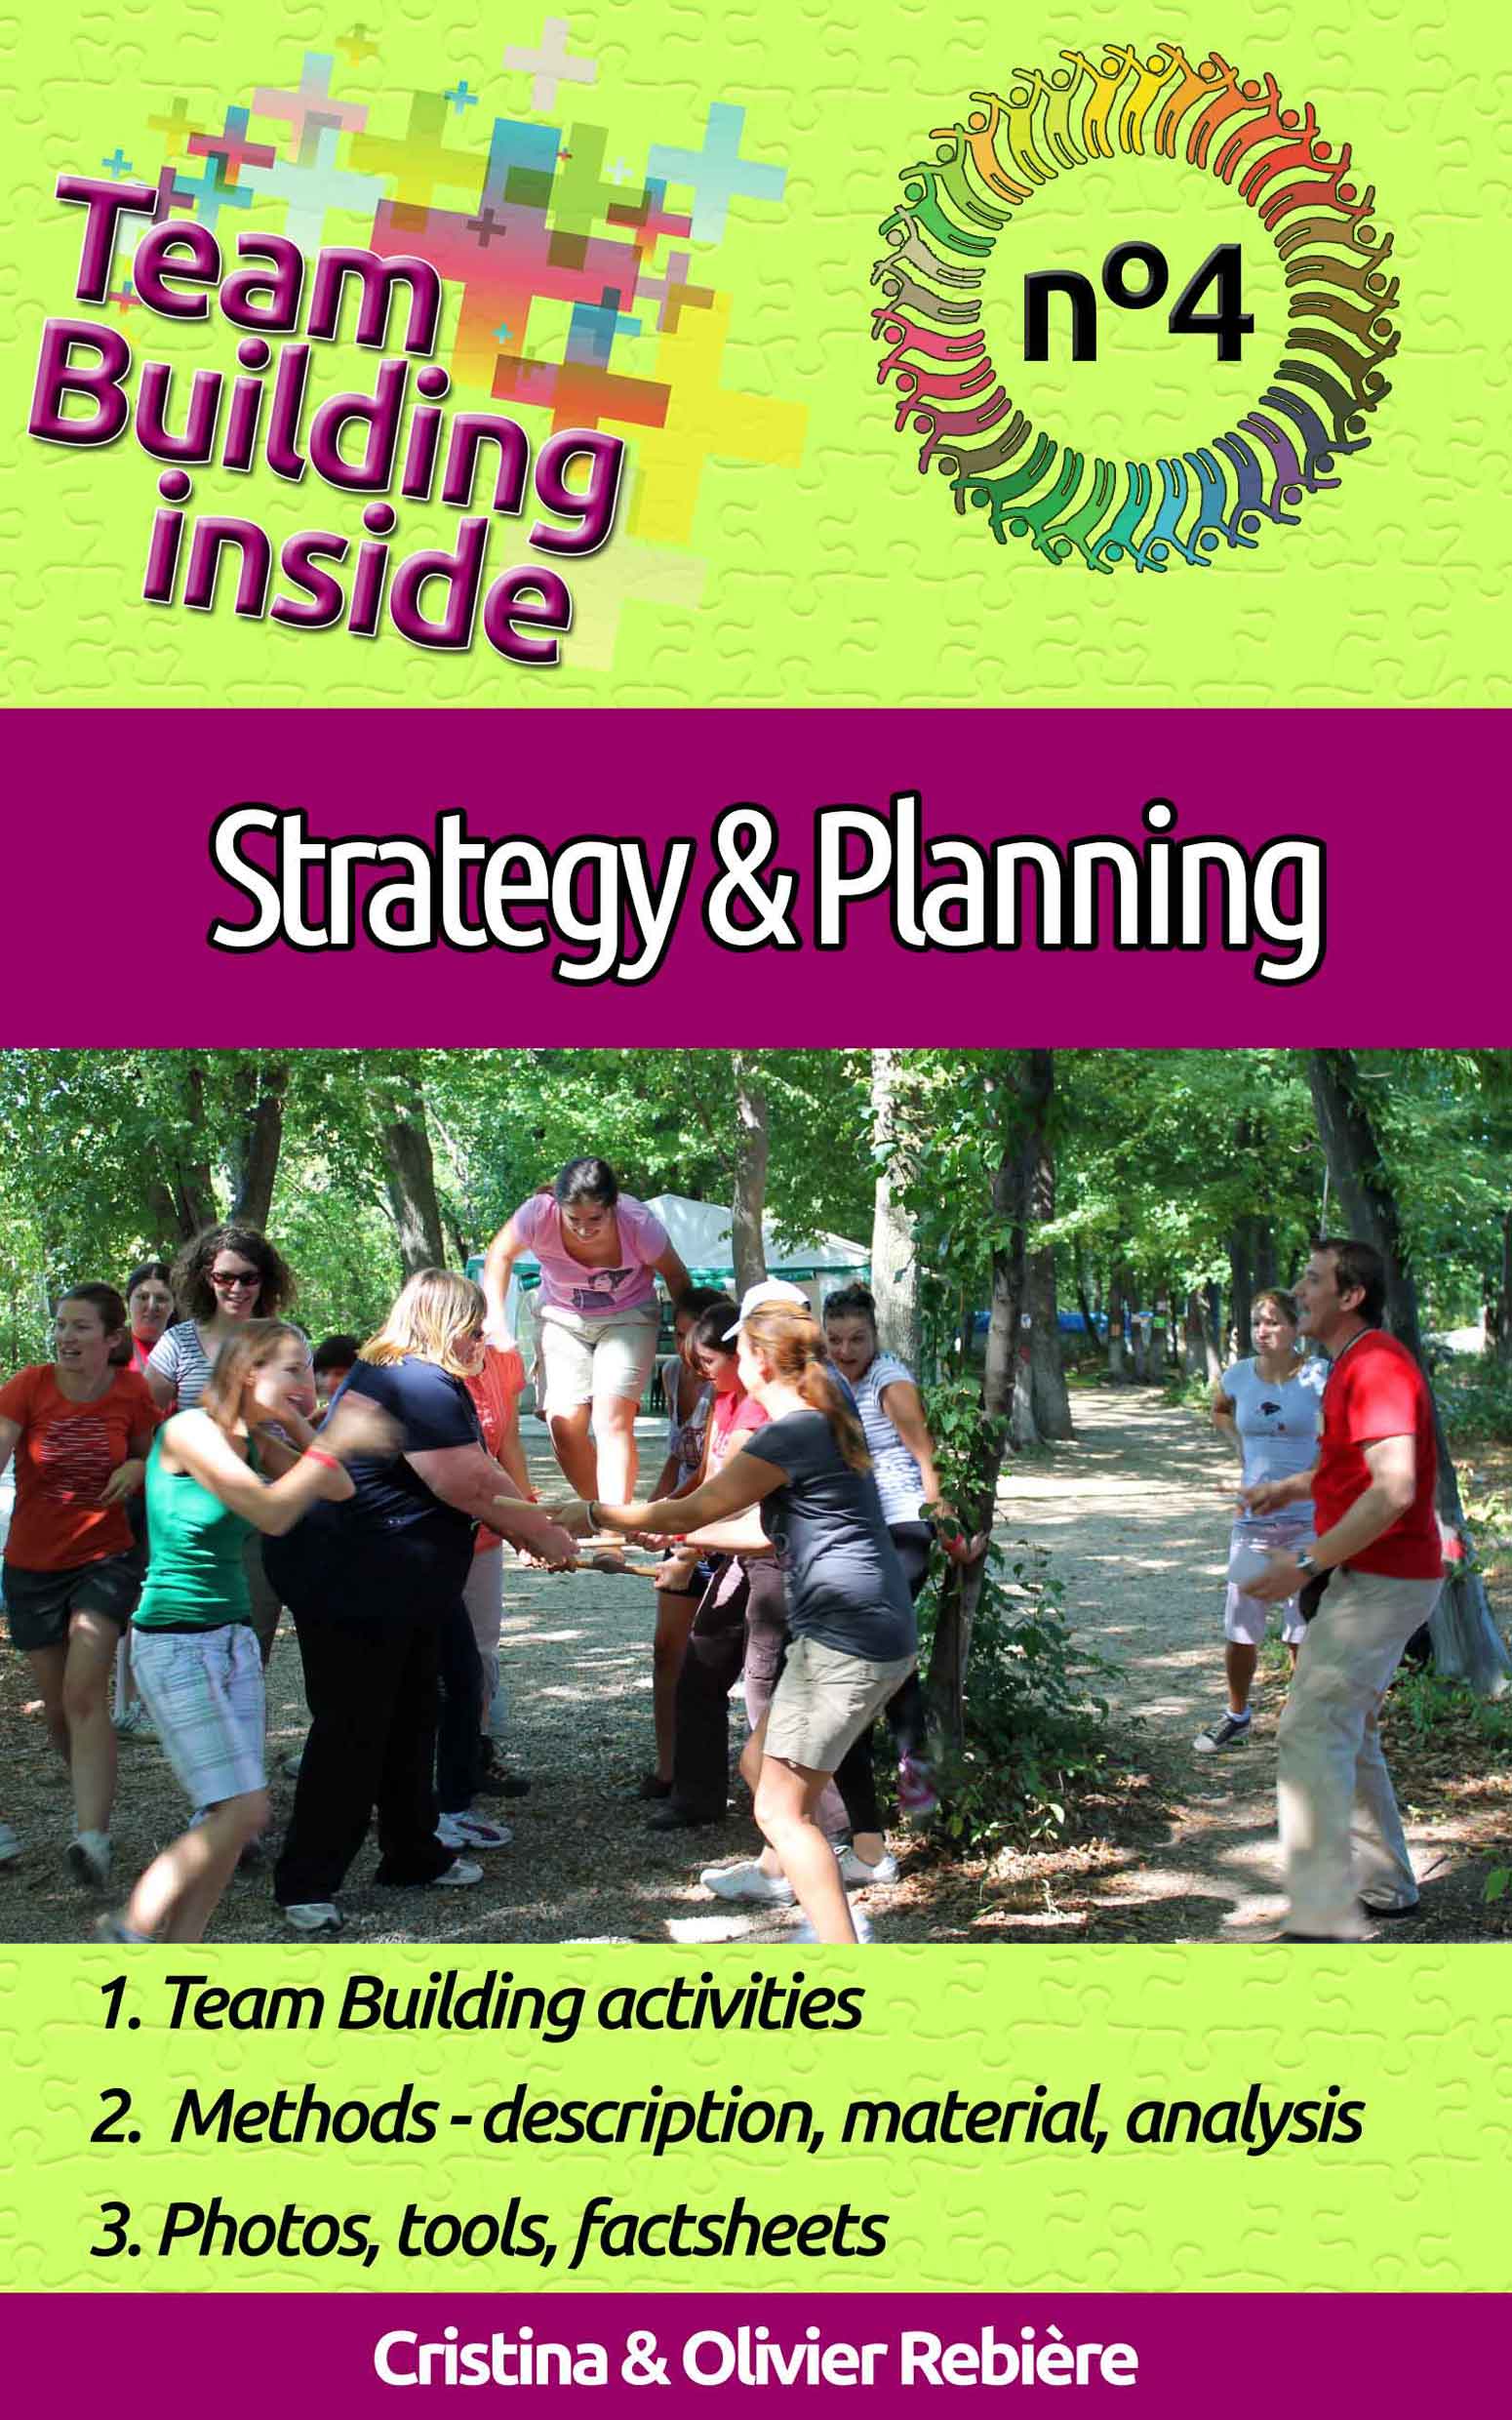 Team Building inside #4 - strategy & planning - Cristina Rebiere & Olivier Rebiere